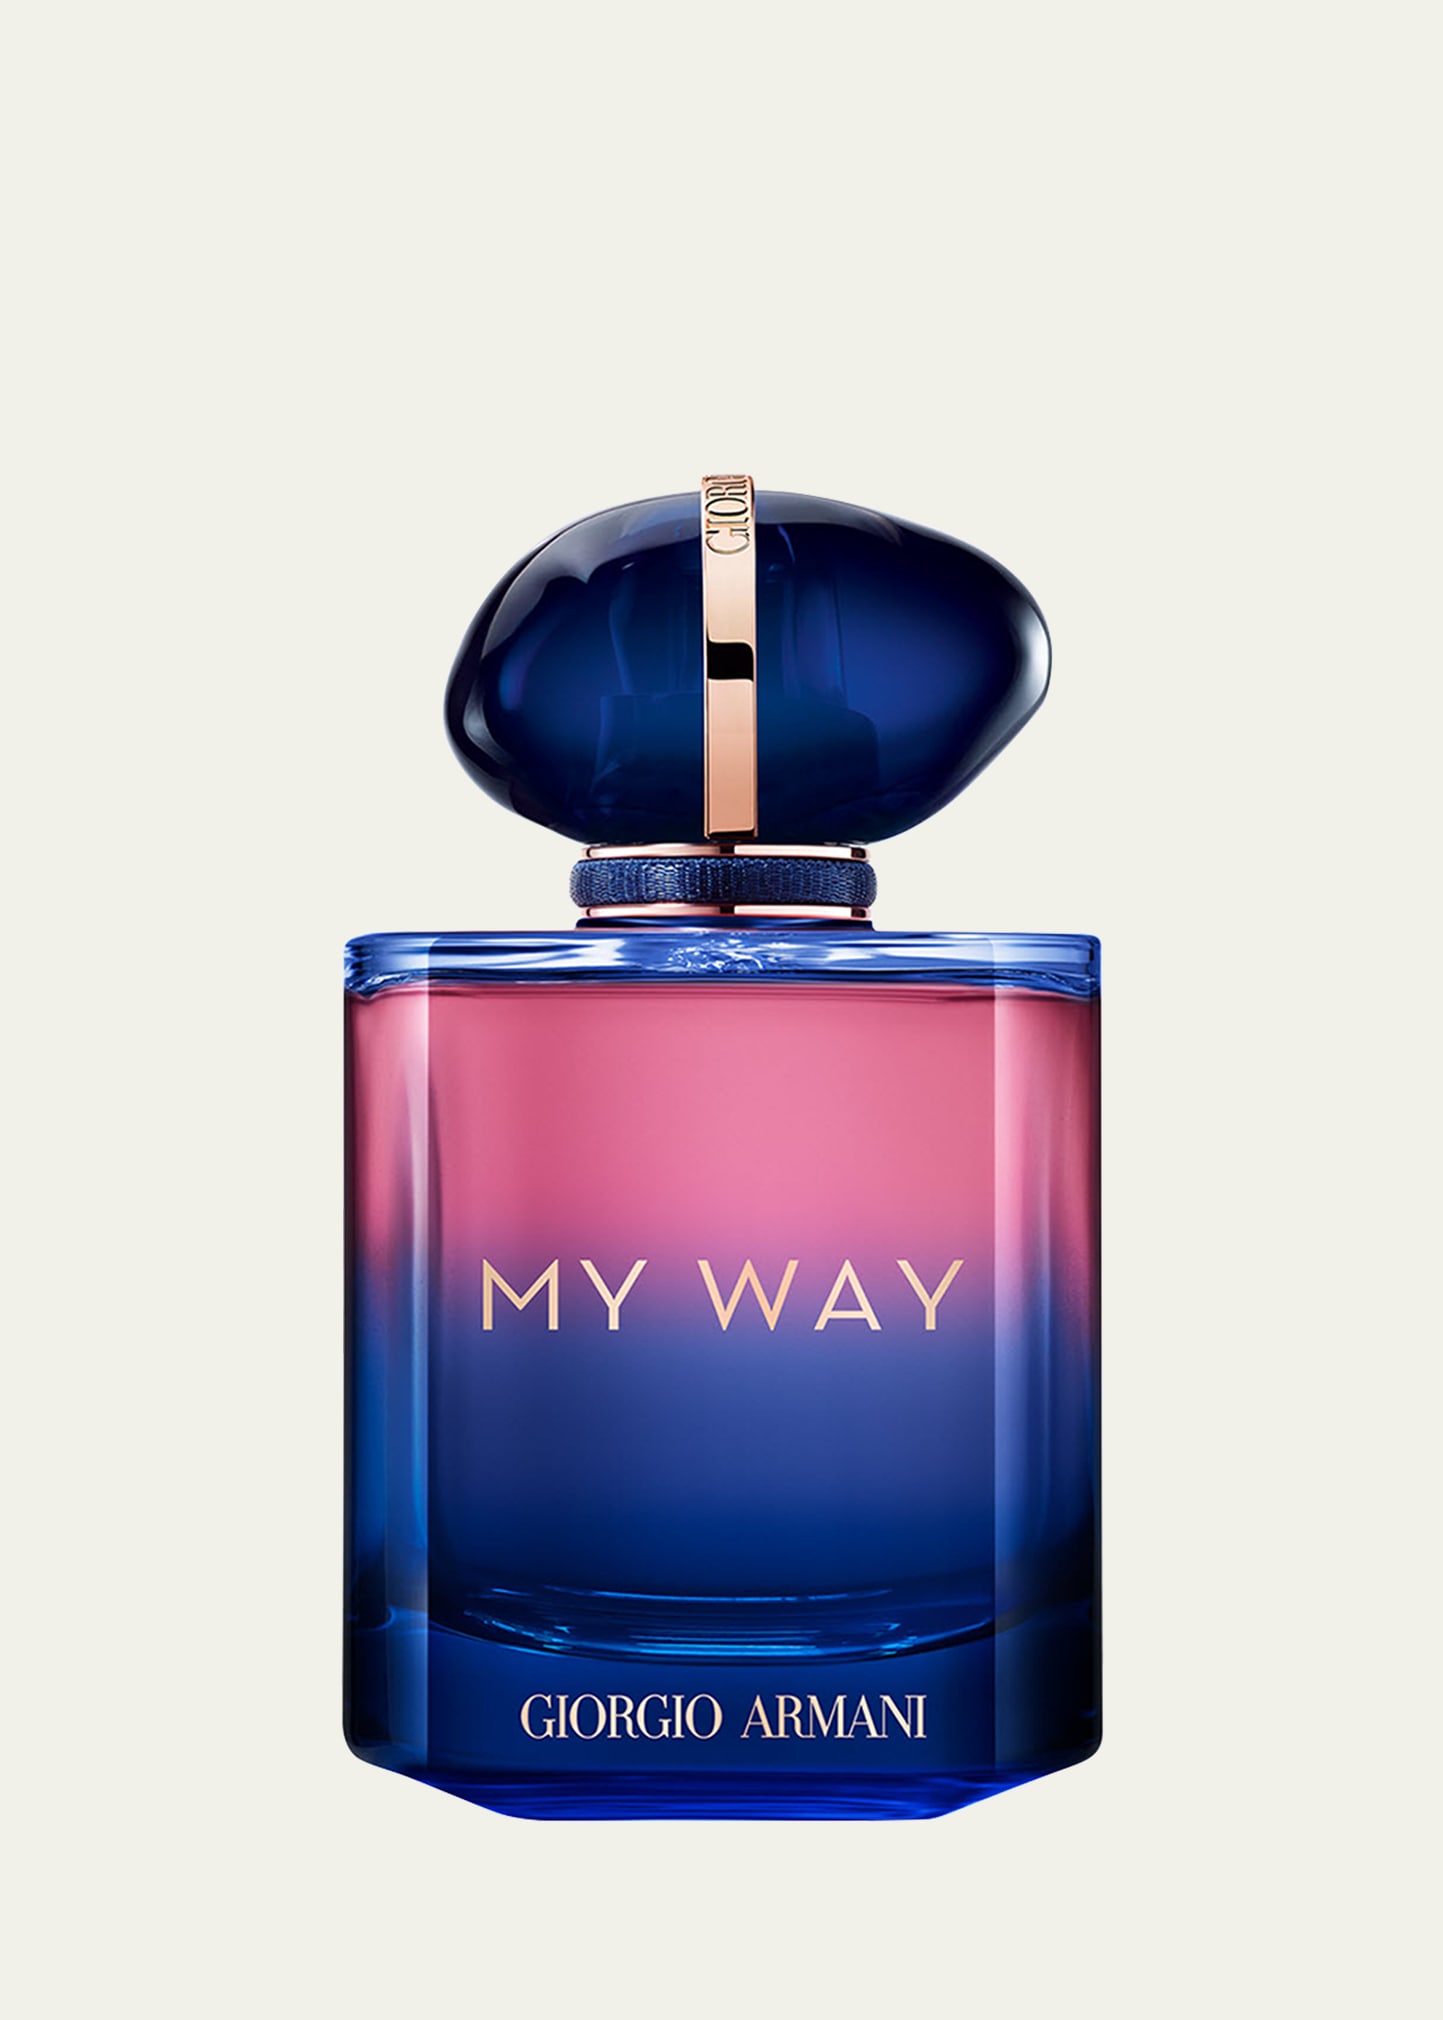 Giorgio Armani My Way Le Parfum, 3.0 Oz.